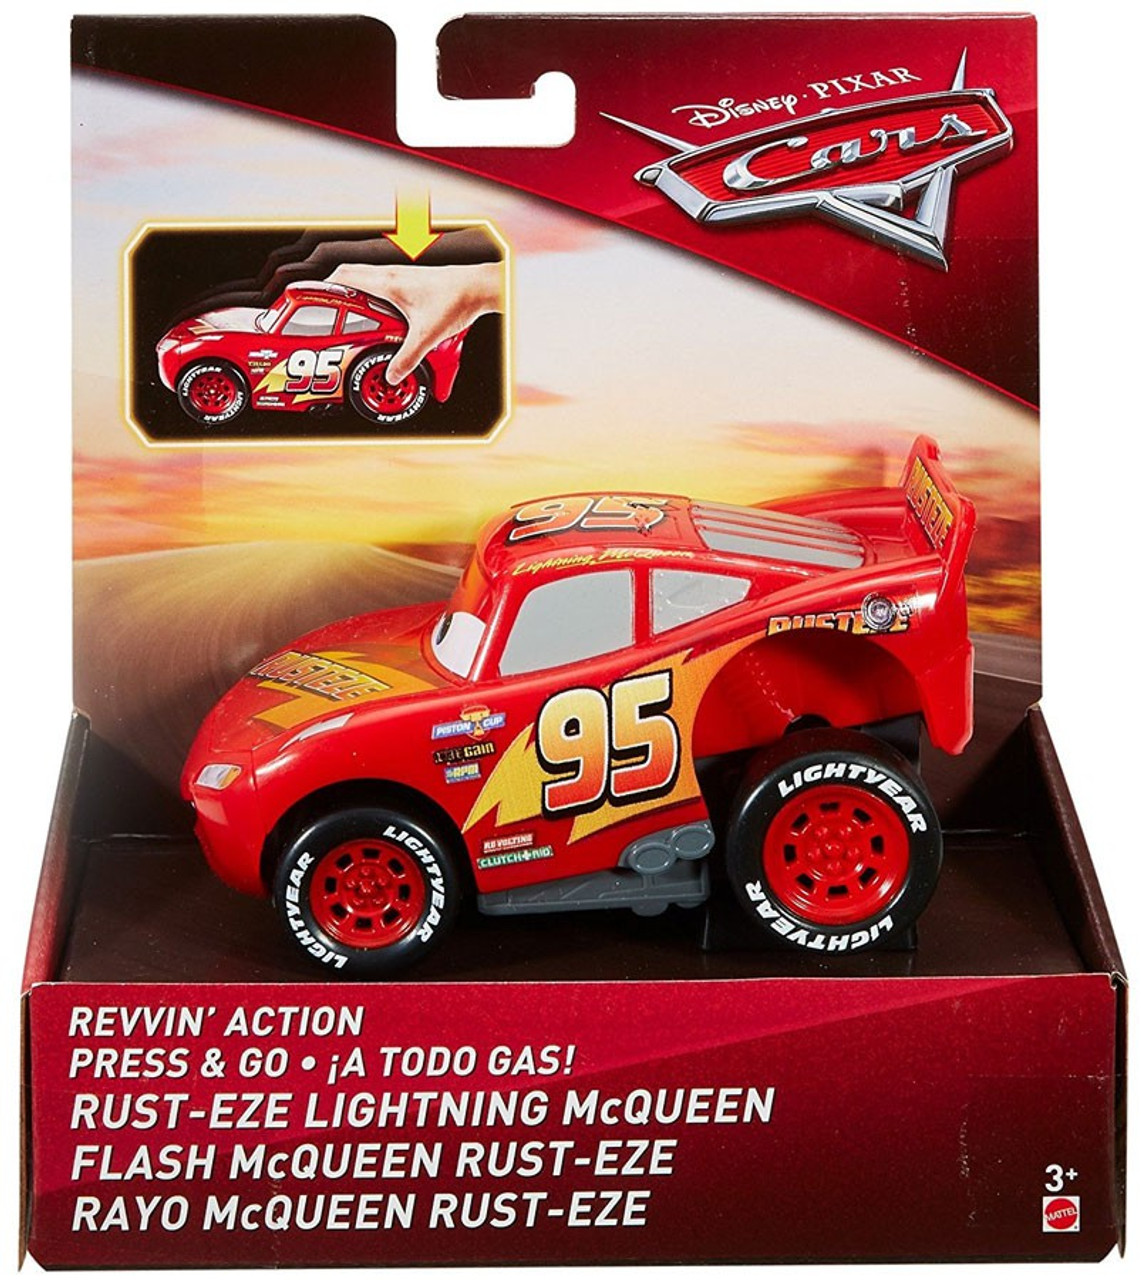 Disney Pixar Cars Cars 3 Revvin Action Rust Eze Lightning Mcqueen